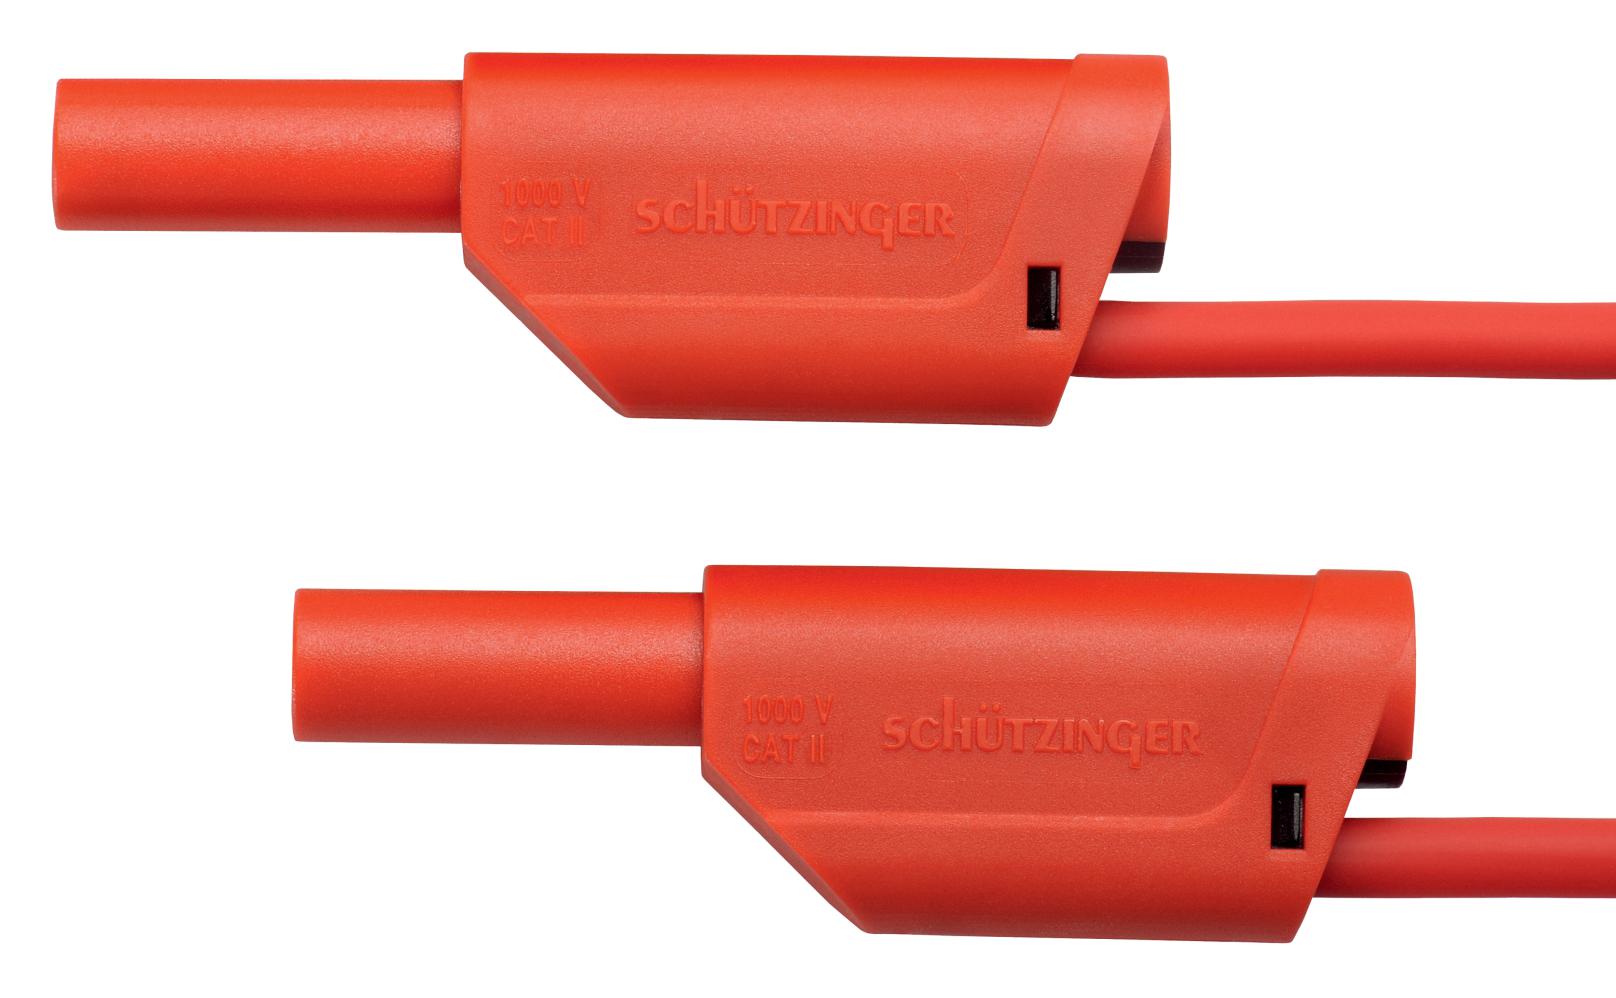 Schutzinger Vsfk 6000 / 2.5 / 50 / Rt Test Lead, Stackable Banana Plug, 500mm